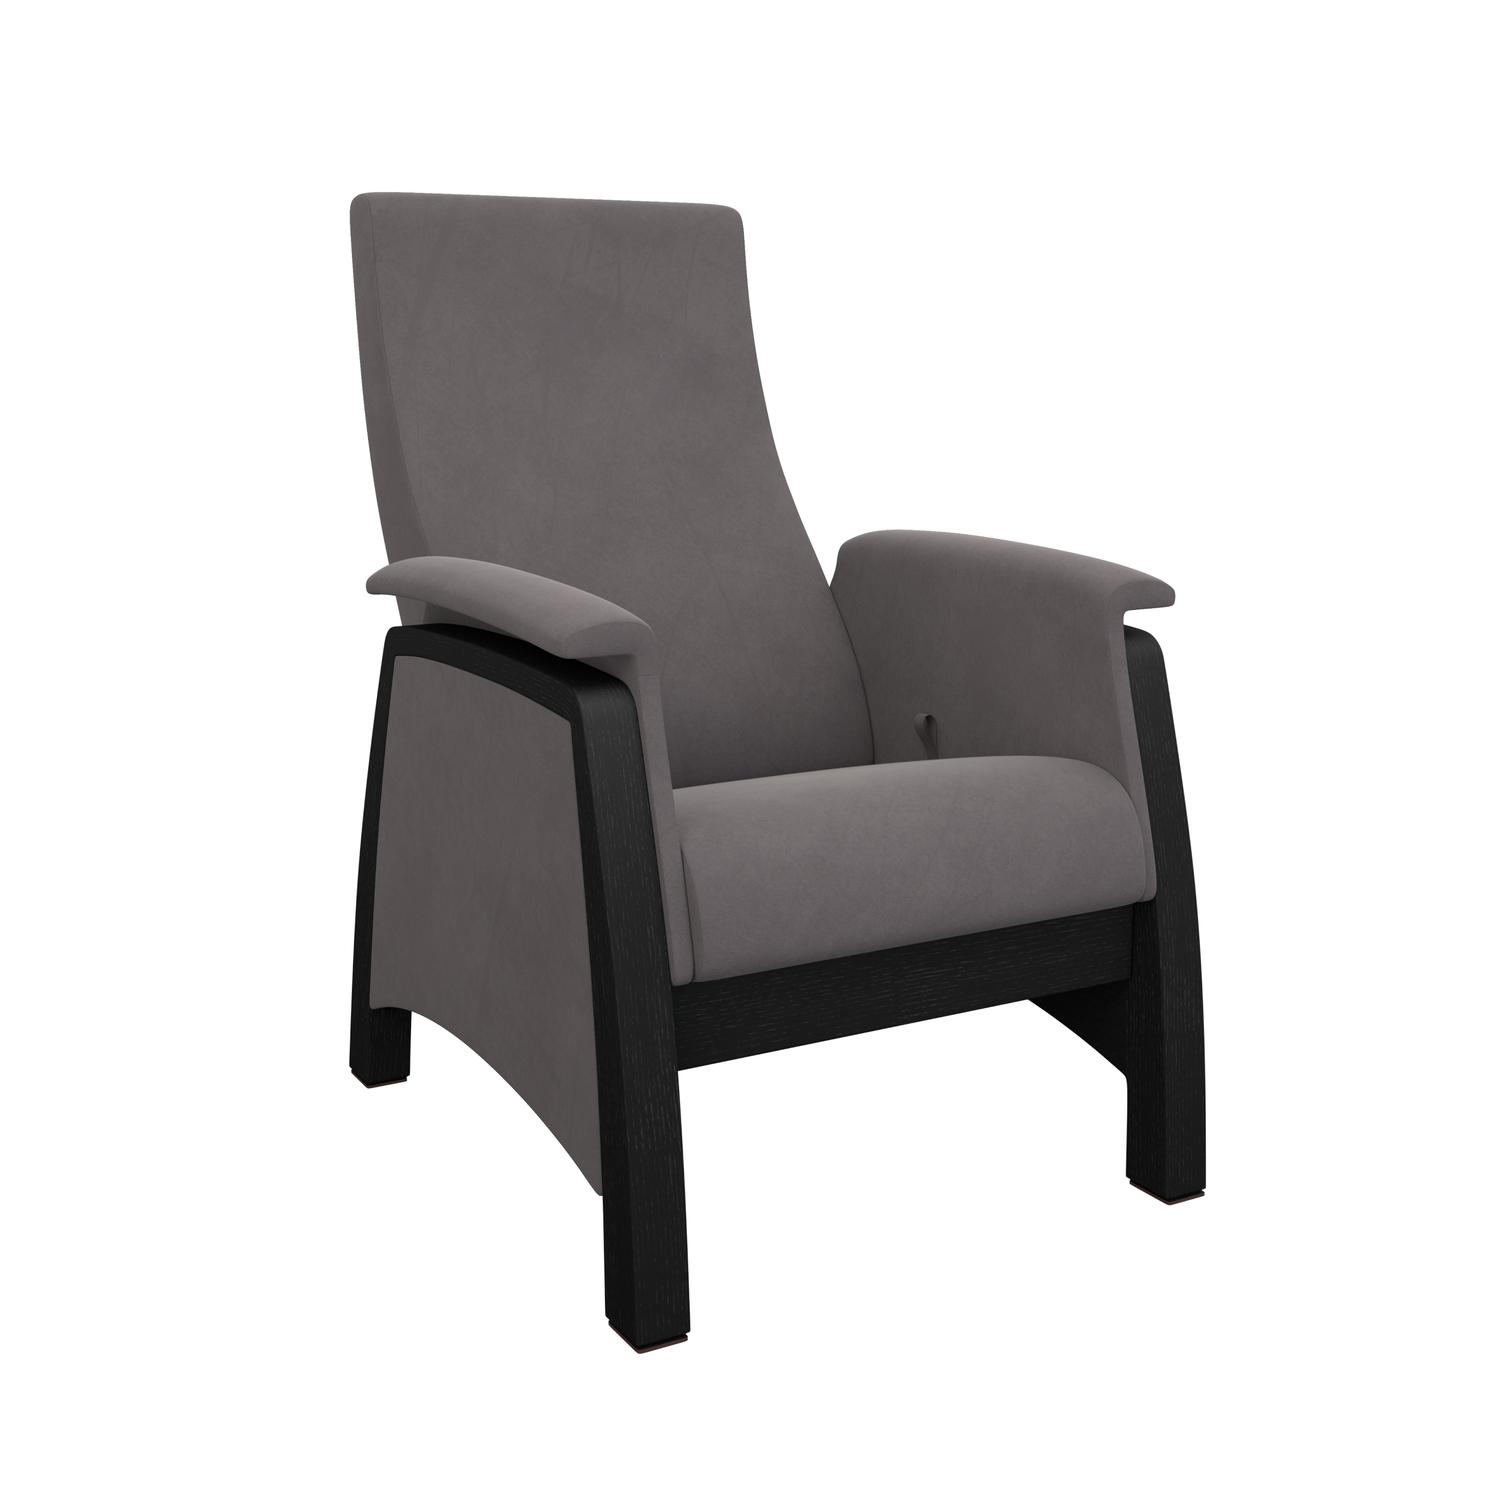 Кресло-глайдер Модель Balance 1 Венге, Verona Antrazite Grey